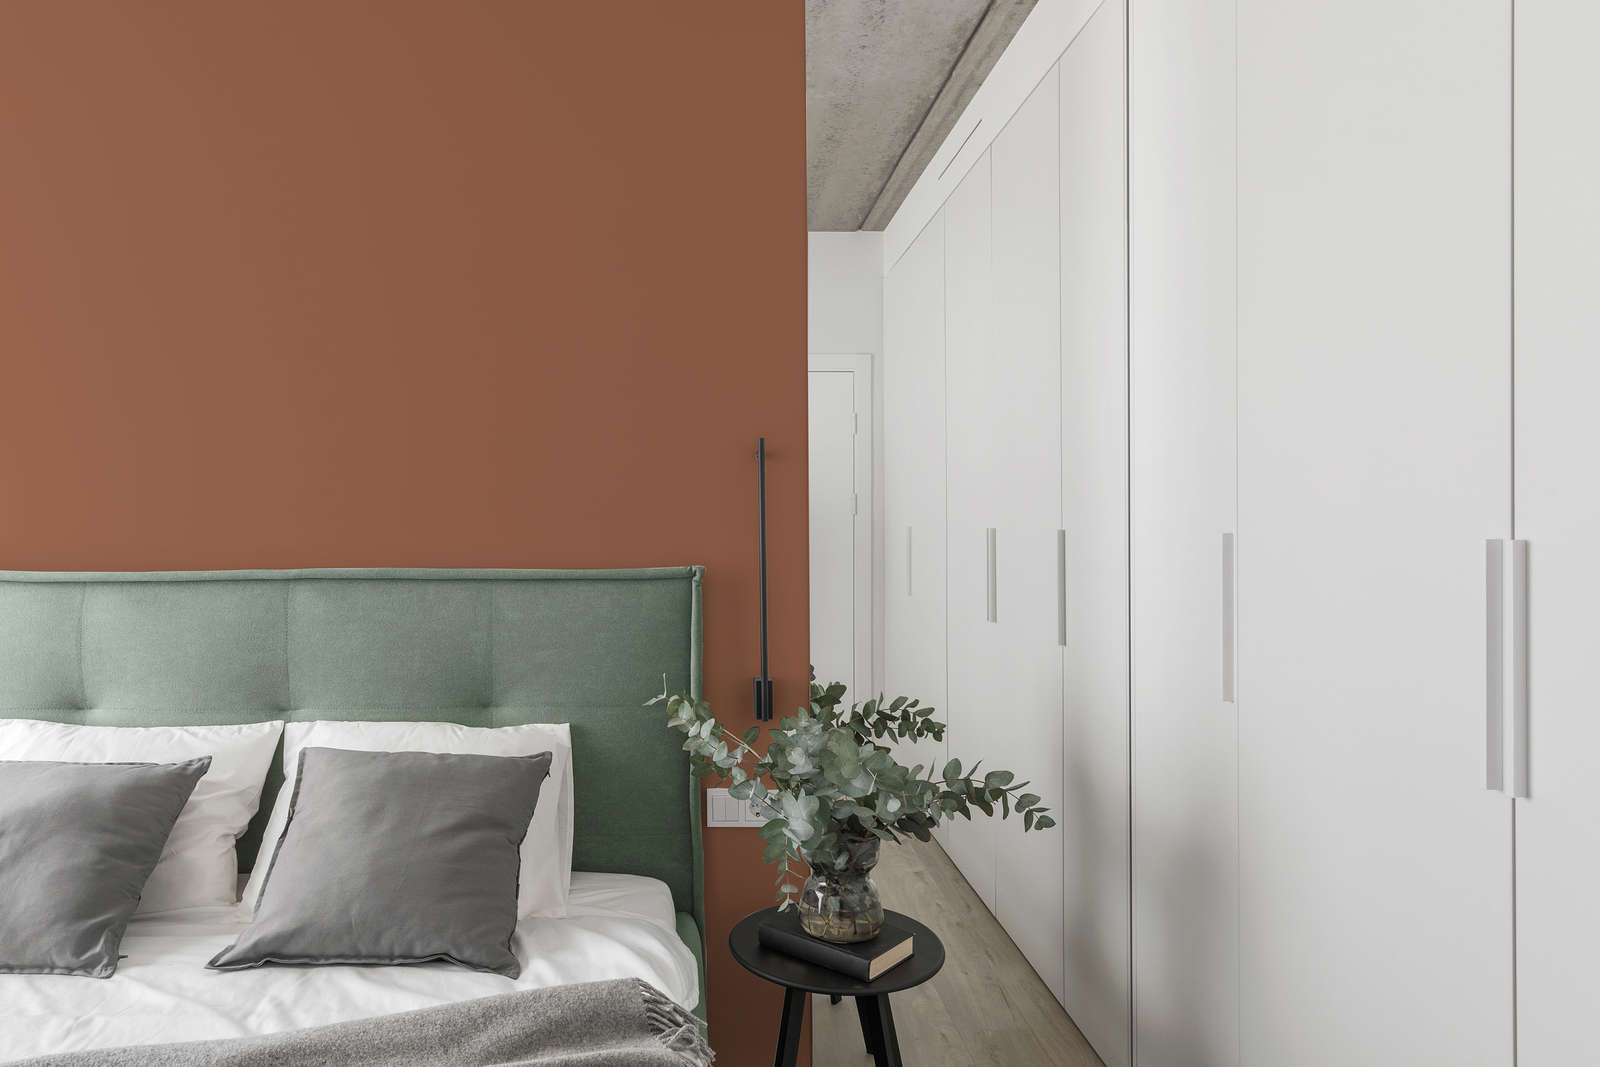             Premium Wall Paint Soothing Terracotta »Pretty Peach« NW909 – 5 litre
        